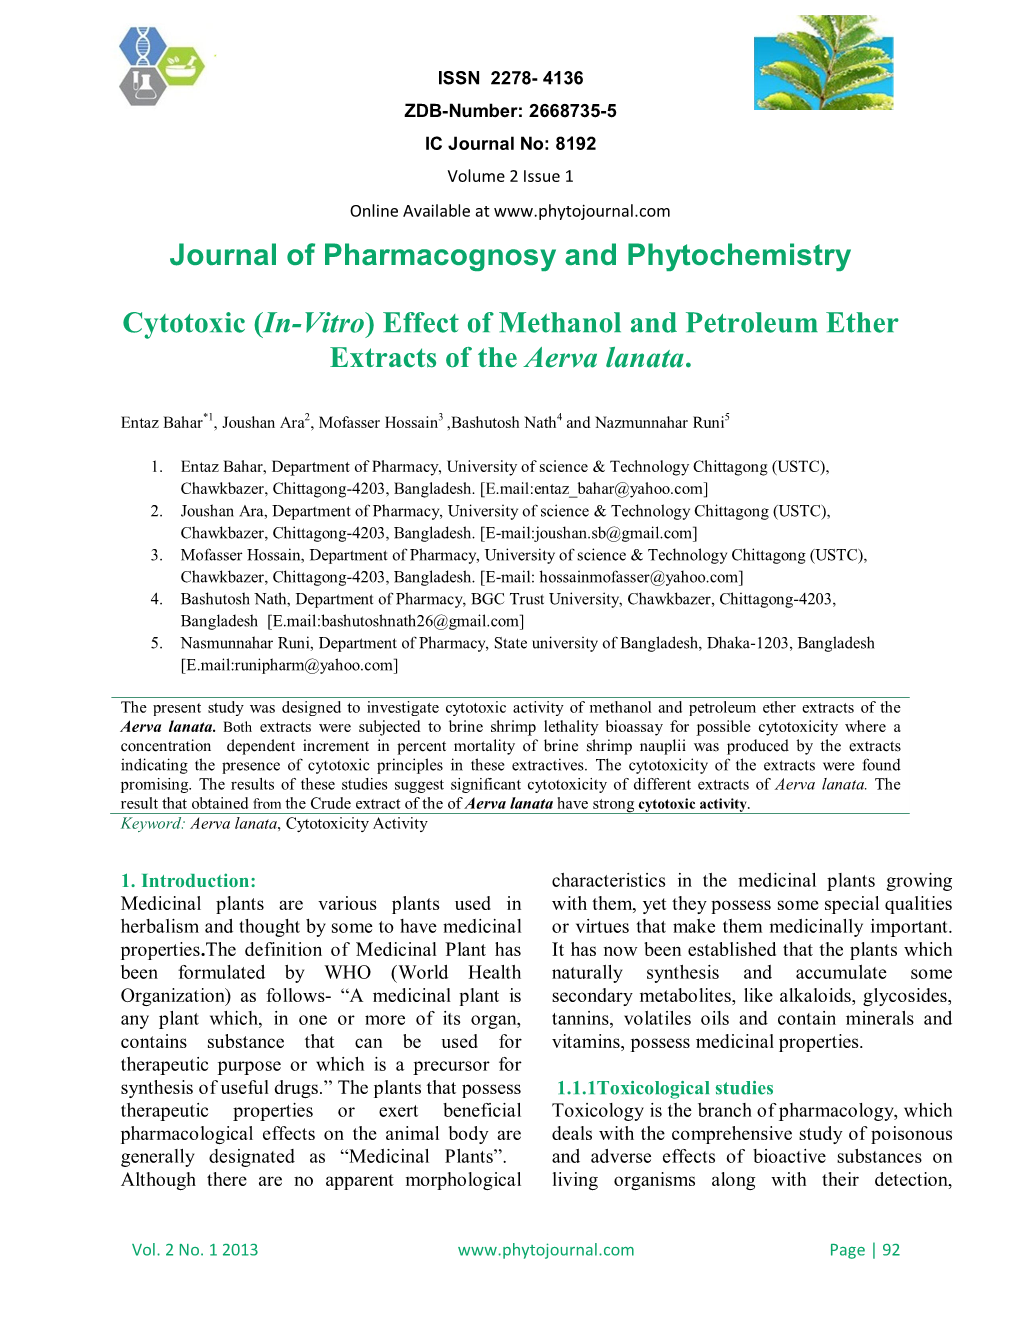 Journal of Pharmacognosy and Phytochemistry Cytotoxic (In-Vitro